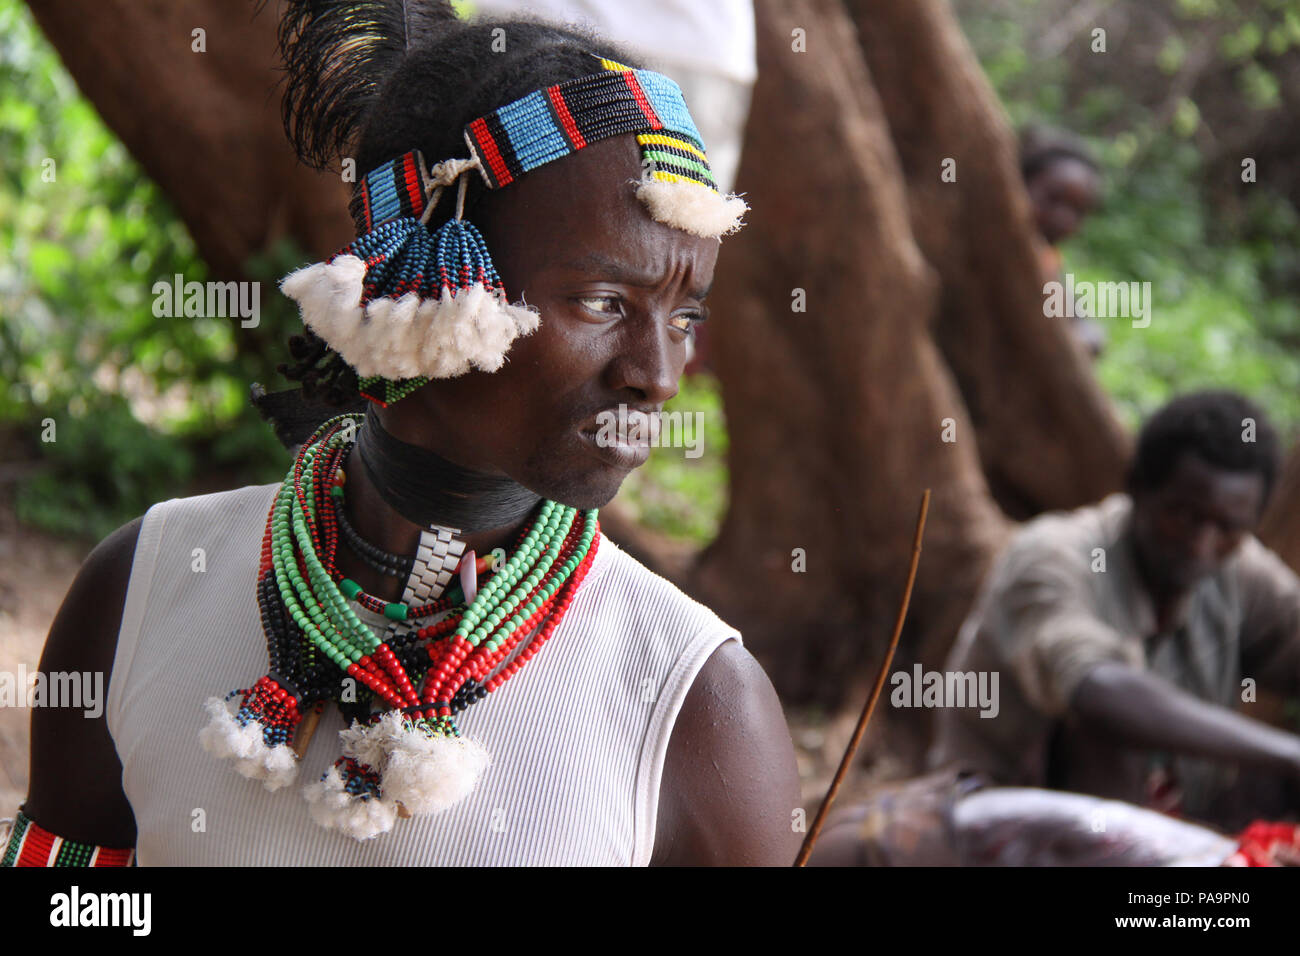 Maza durante Bull Jumping cerimonia (Ukuli rituale) da Hamer Hamar tribù, Etiopia Foto Stock